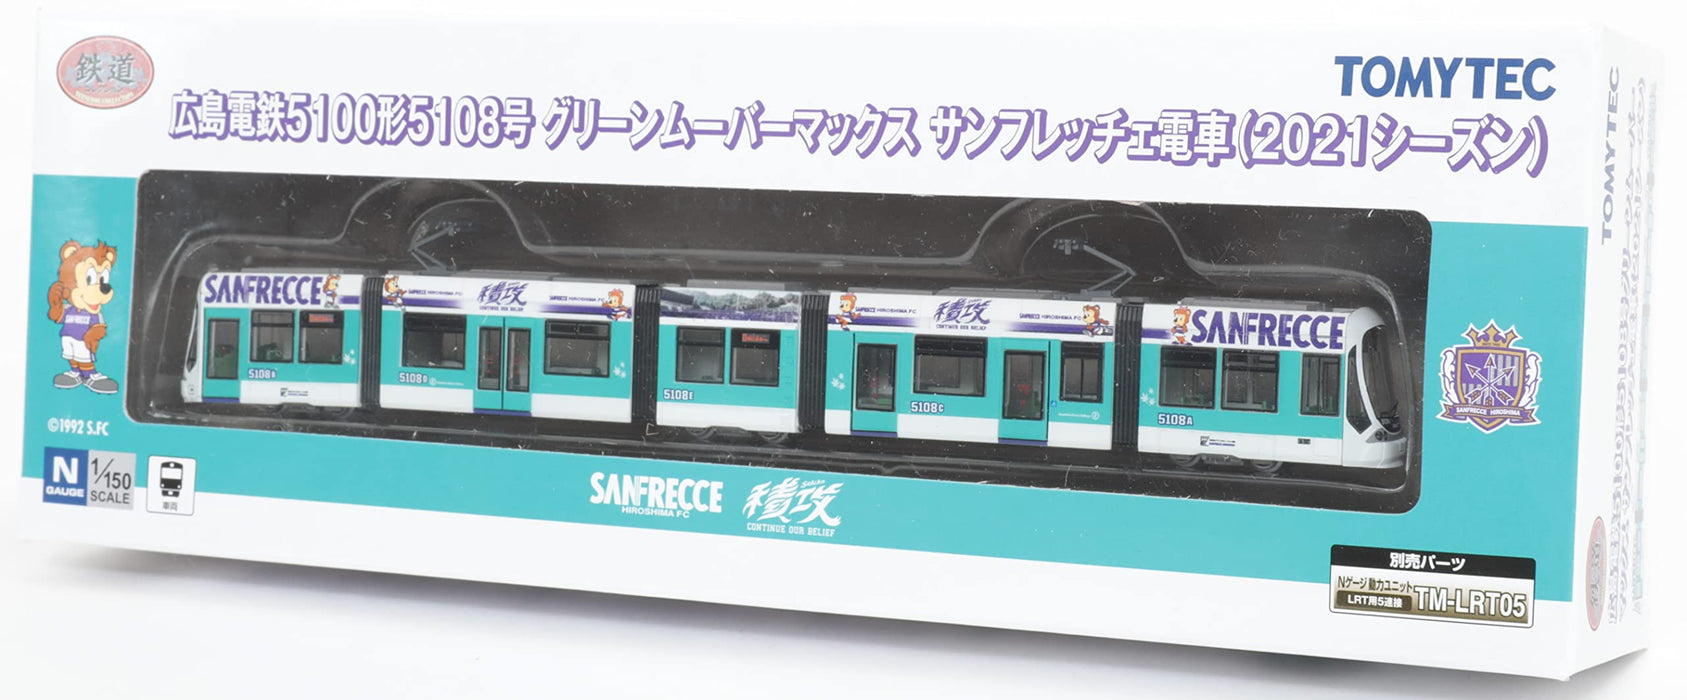 Tomytec Railway Collection Hiroshima Electric Railway Type 5100 No. 5108 Green Mover Max Sanfrecce Train 2021 Diorama Japan 316602